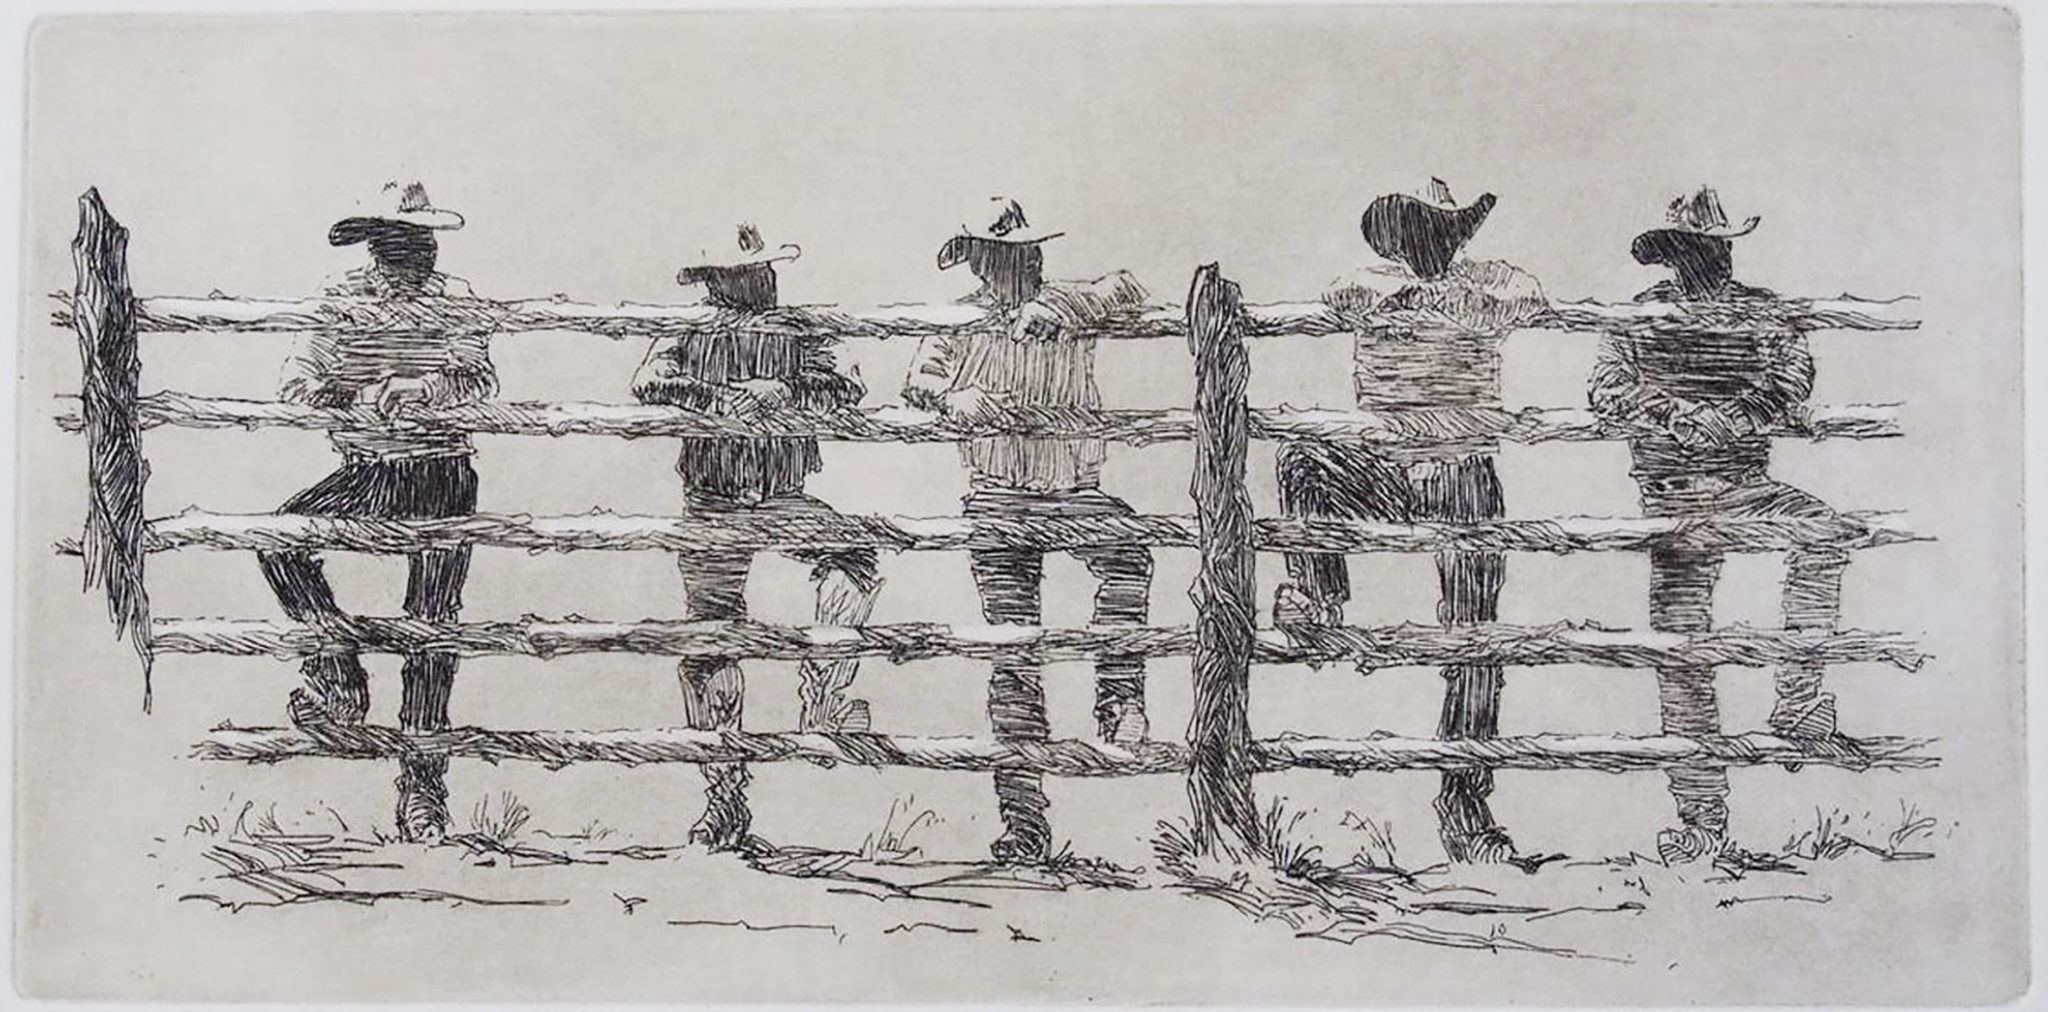 Intaglio print by Joel Ostlind of cowboys standing along a fenceline